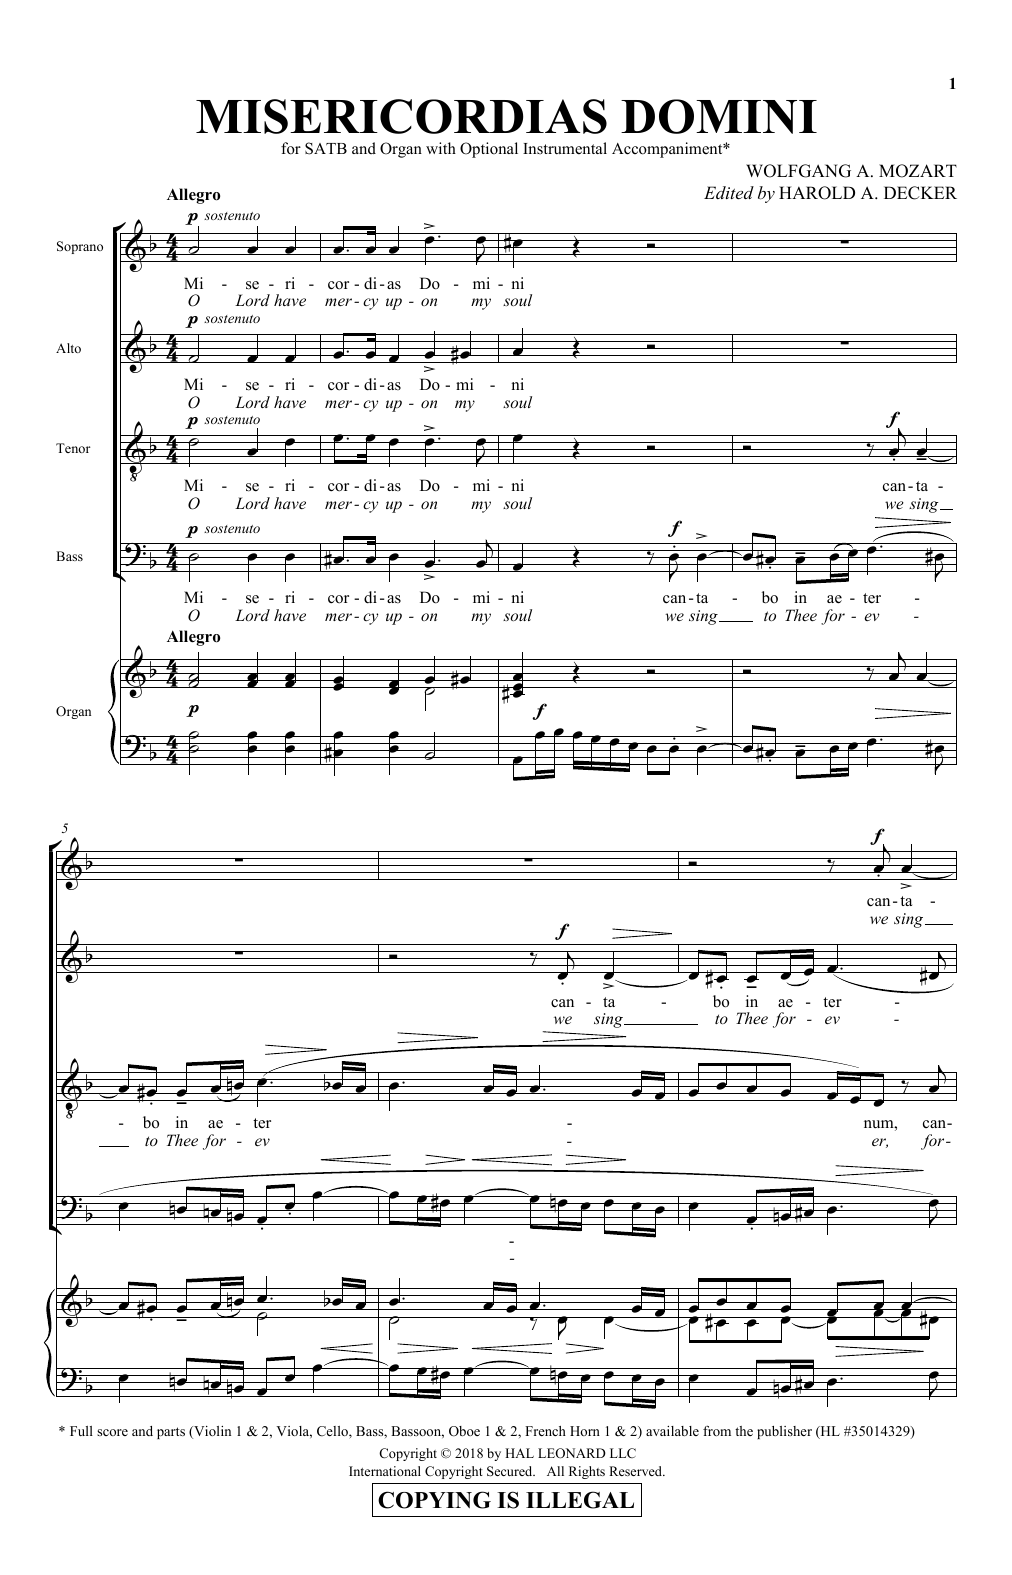 Harold Decker Misericordias Domini Sheet Music Notes & Chords for SATB - Download or Print PDF